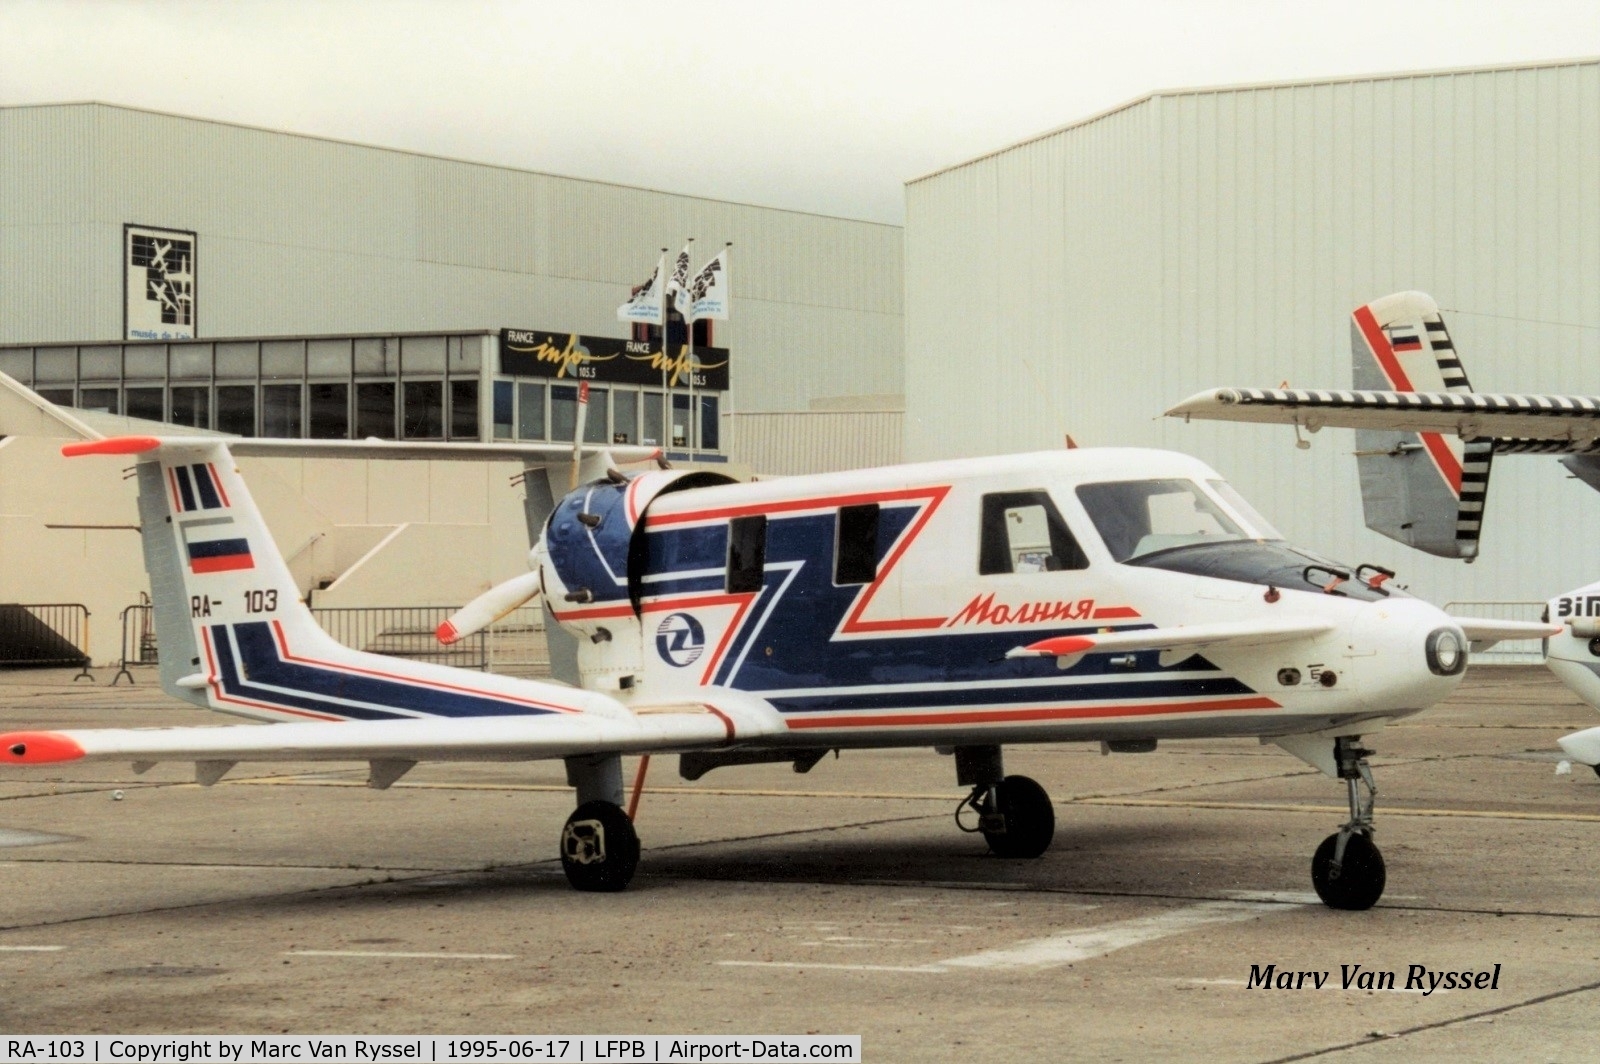 RA-103, 1994 NPO Molniya 1 Triplane C/N not found RA-103, Paris-Le Bourget airshow 1995.